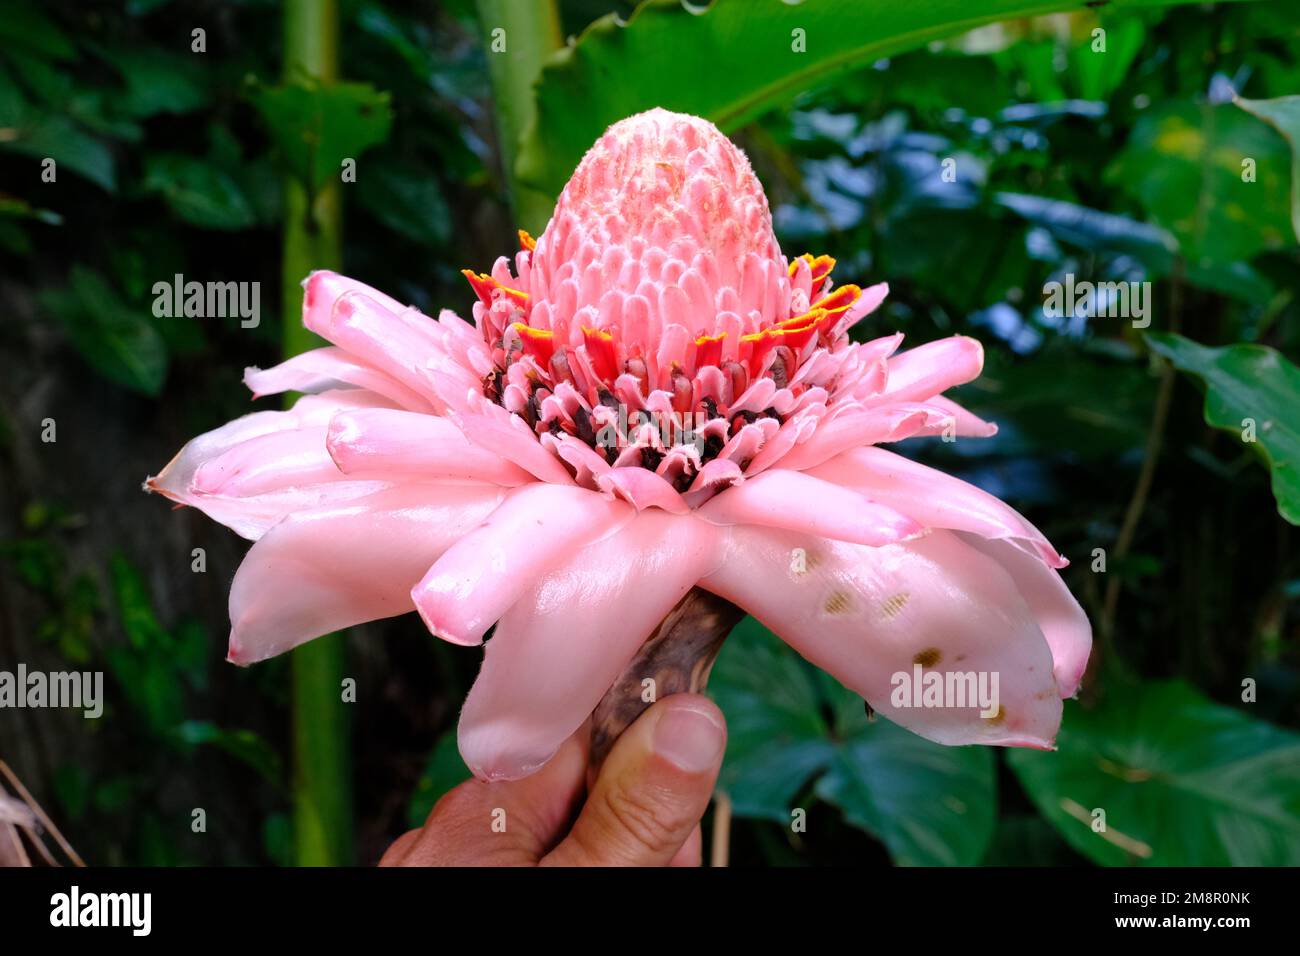 Indonésie Bali - Etlingera elatior - fleur de gingembre - gingembre sauvage Banque D'Images